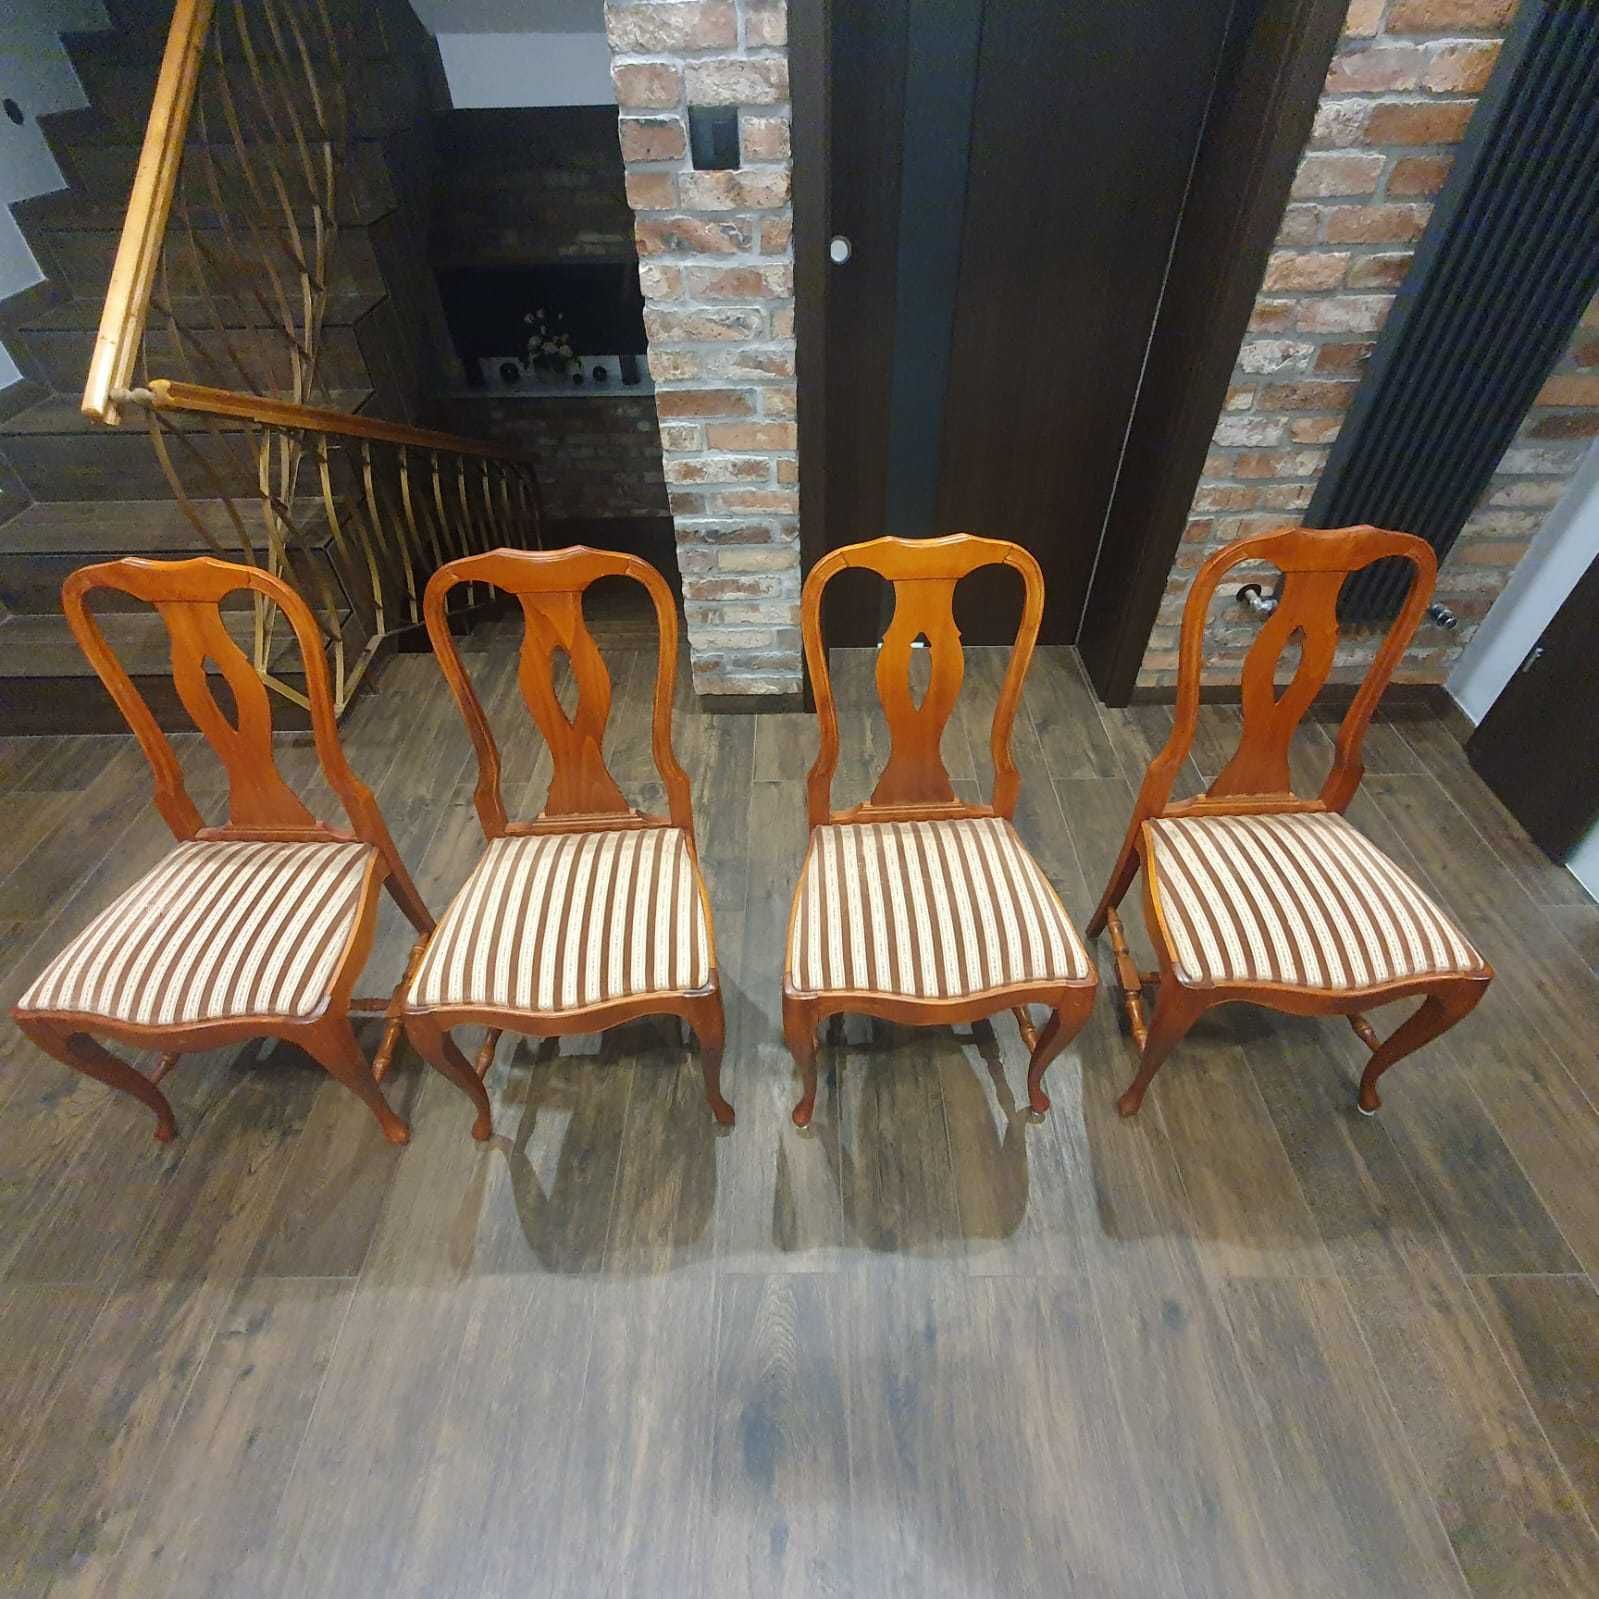 Stół + krzesła komplet